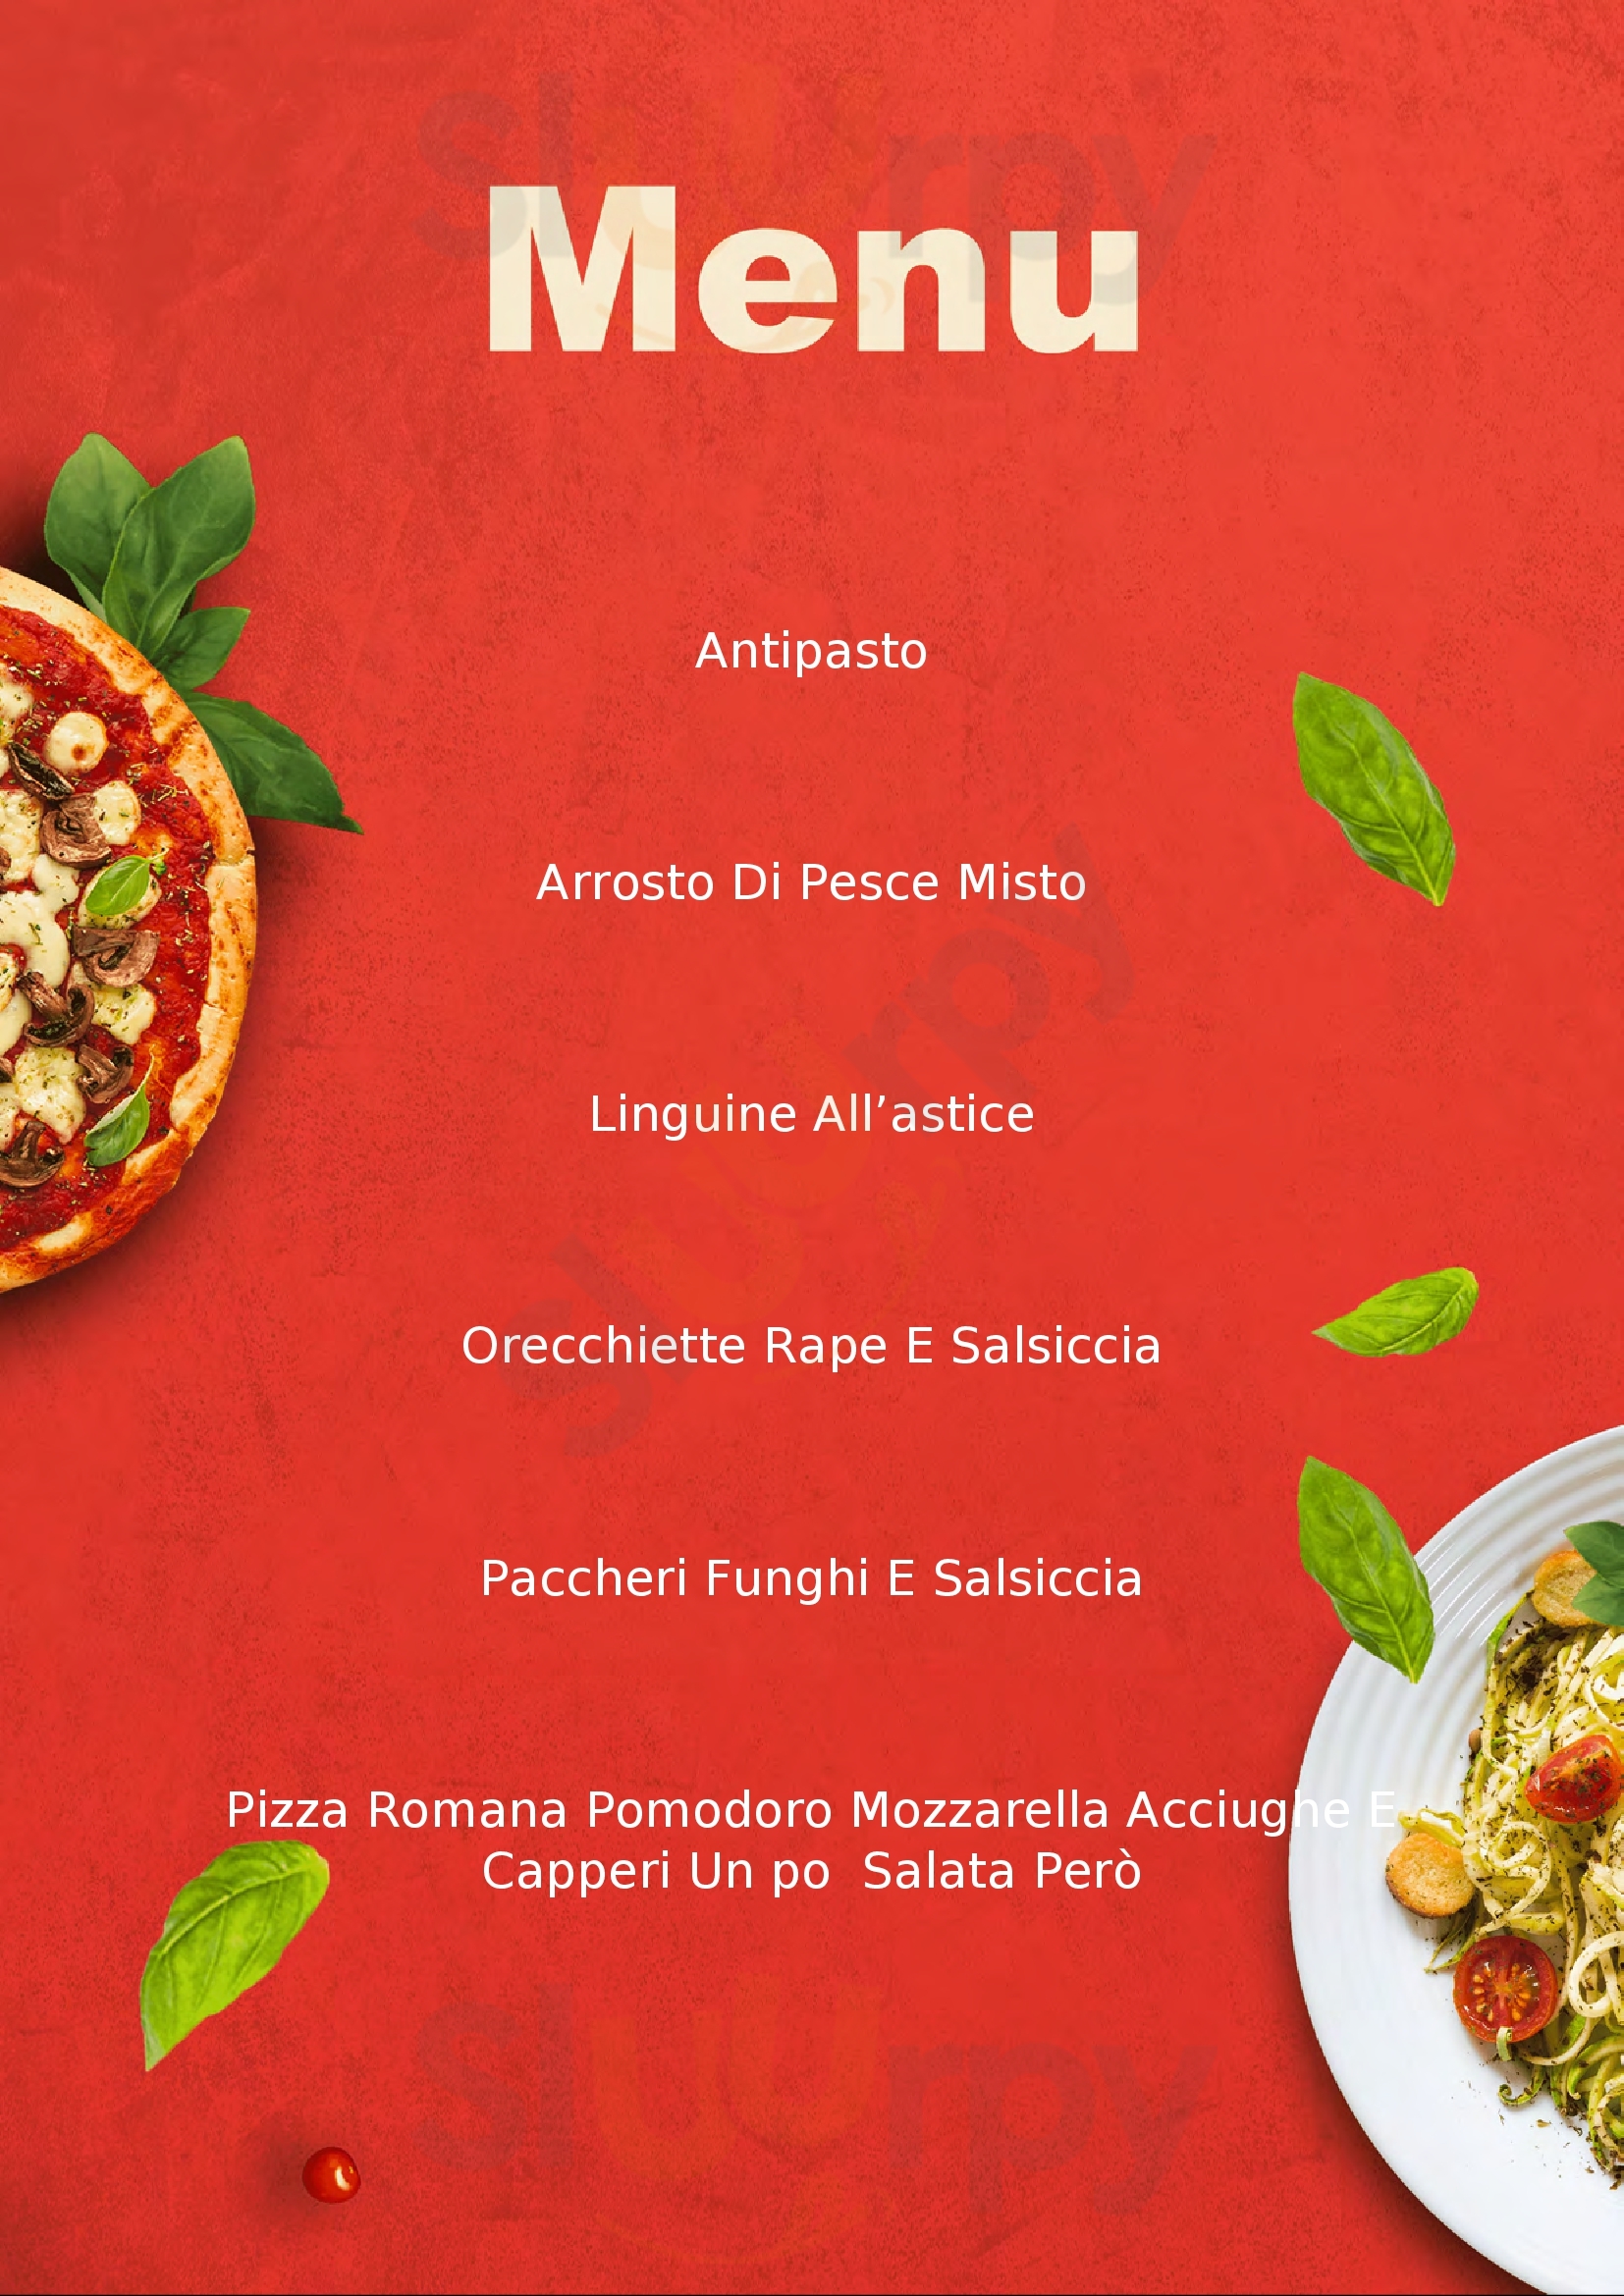 Ristorante Pizzeria Roseto Capo Spulico menù 1 pagina